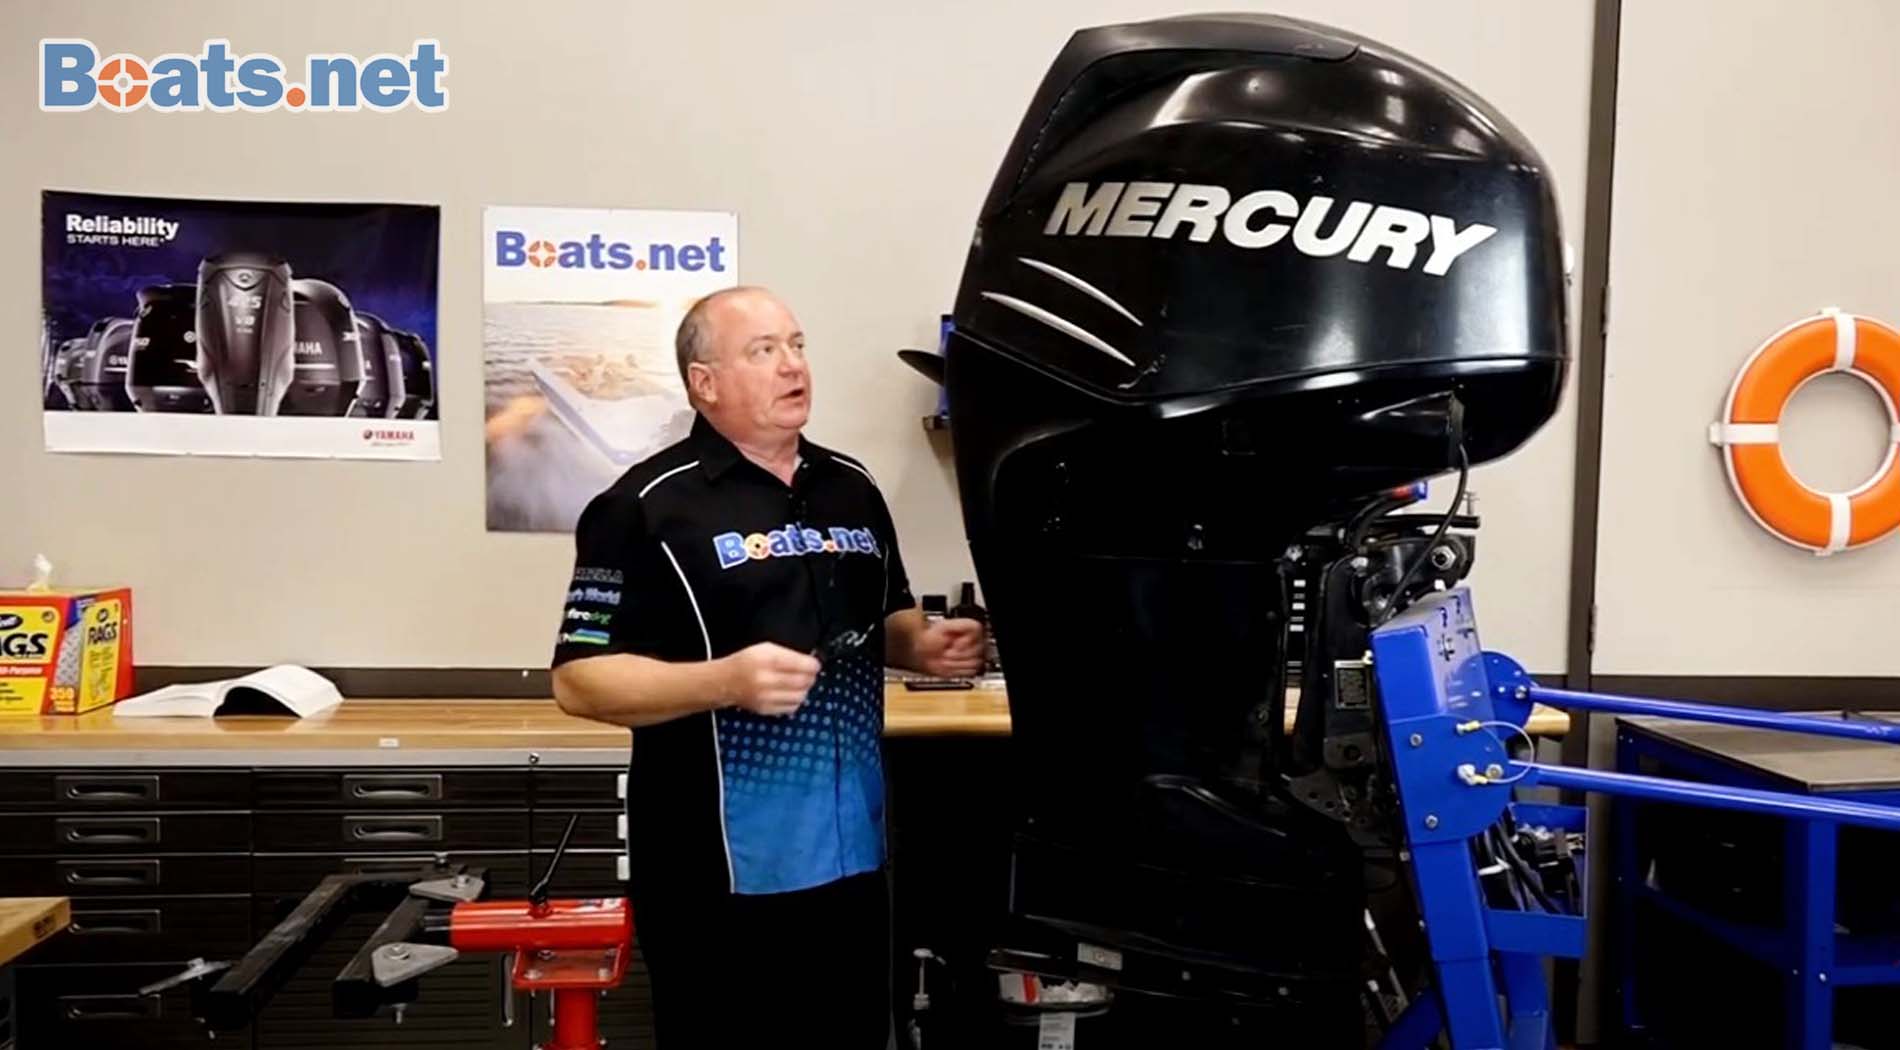 Mercury outboard engine warranty